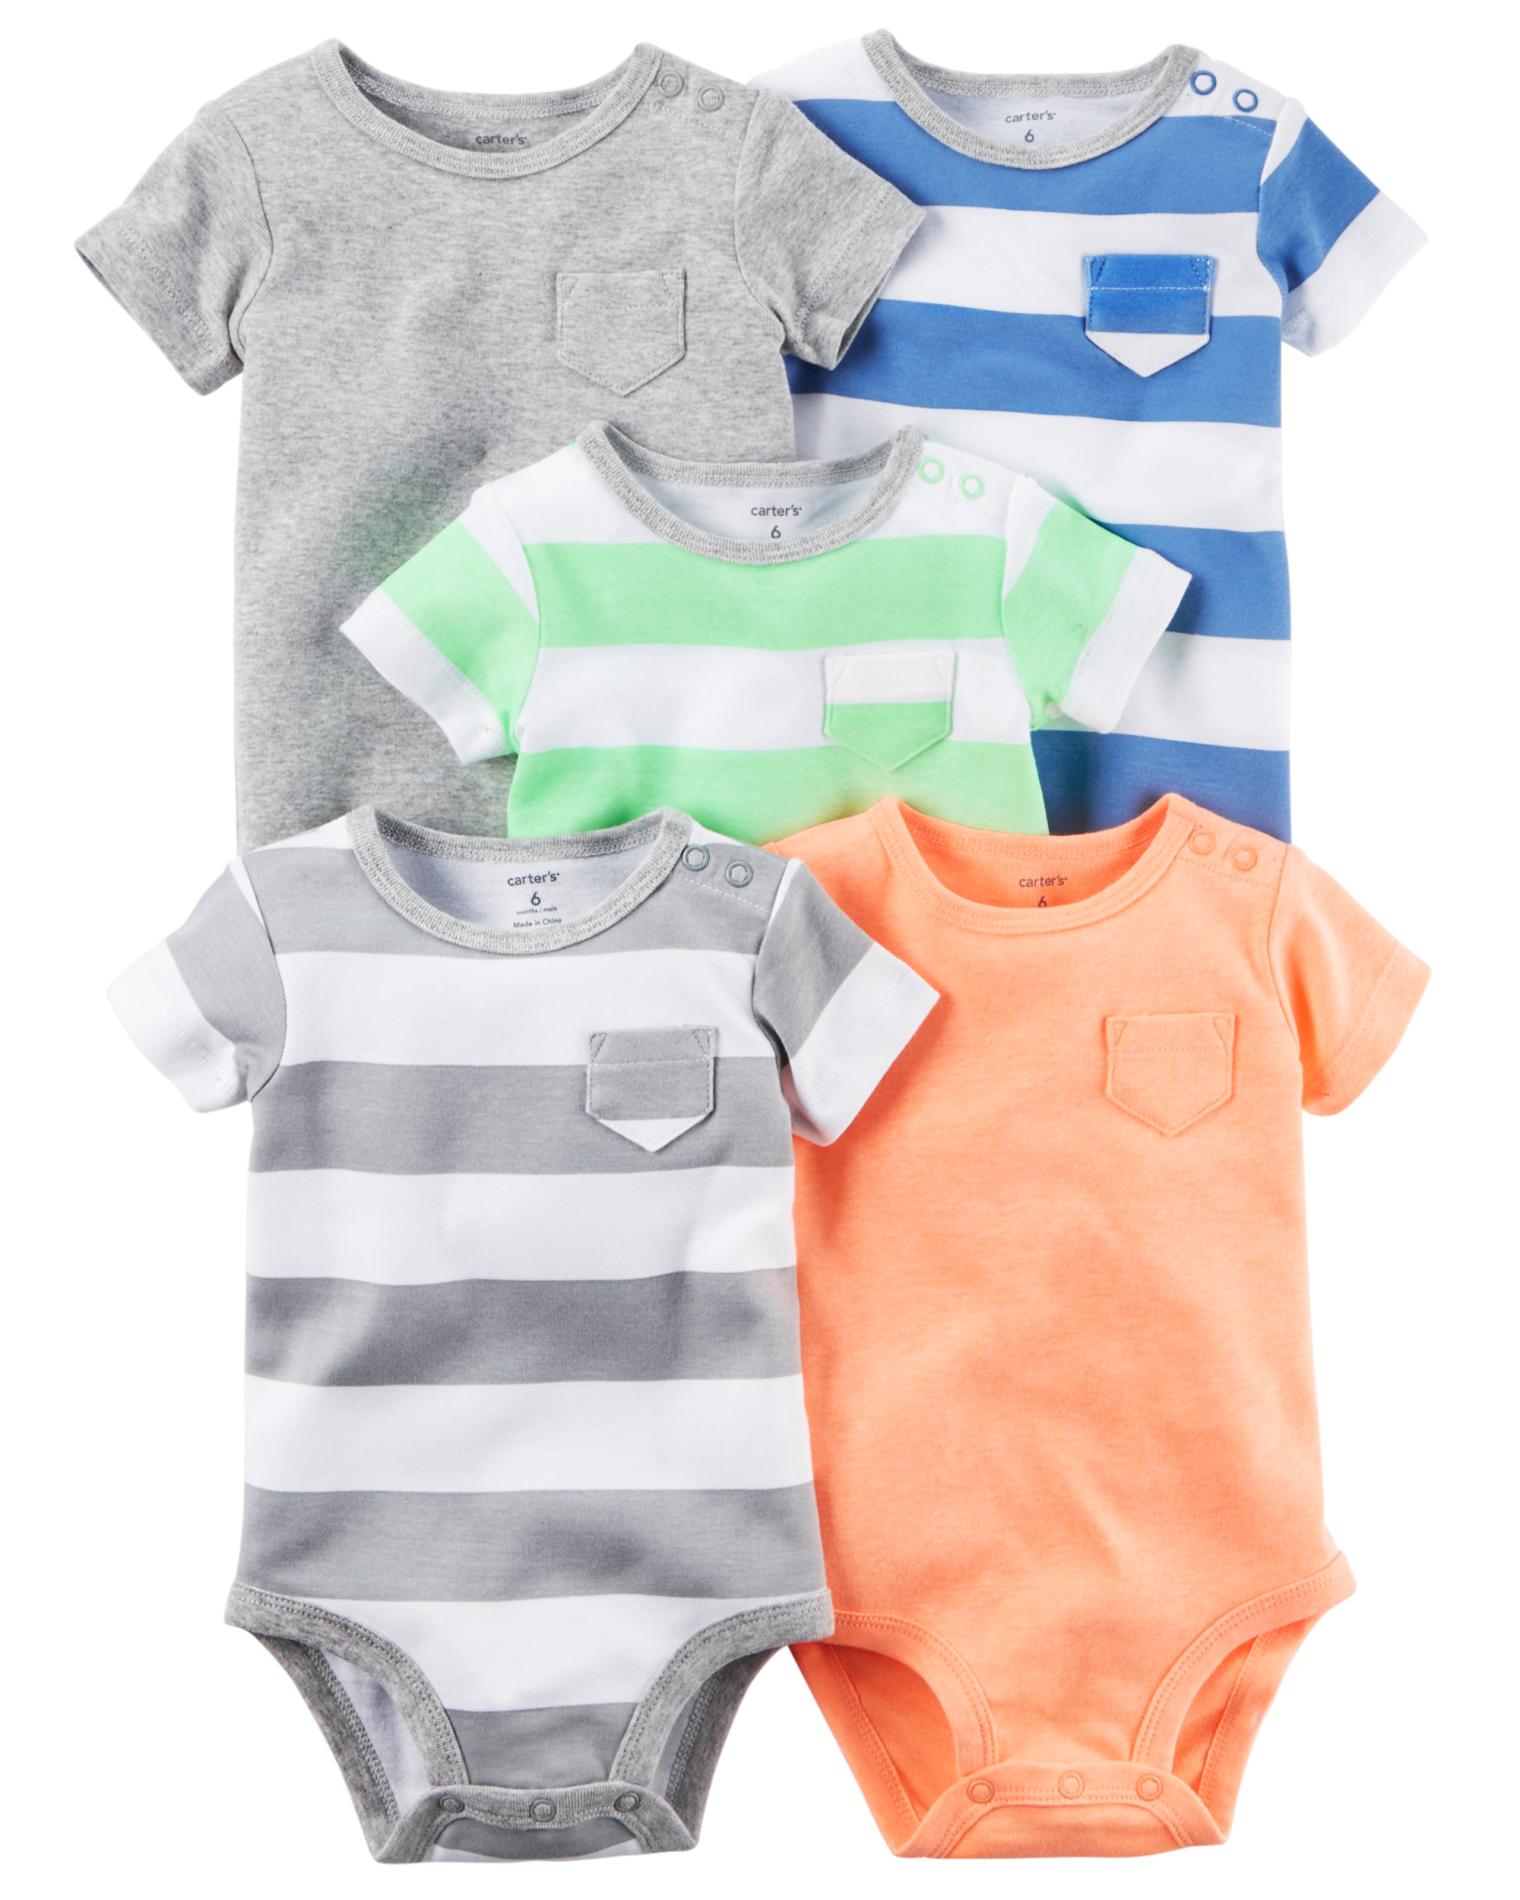 Carter's Newborn & Infant Boys' 5-Pack Short-Sleeve Bodysuits - Solid & Striped